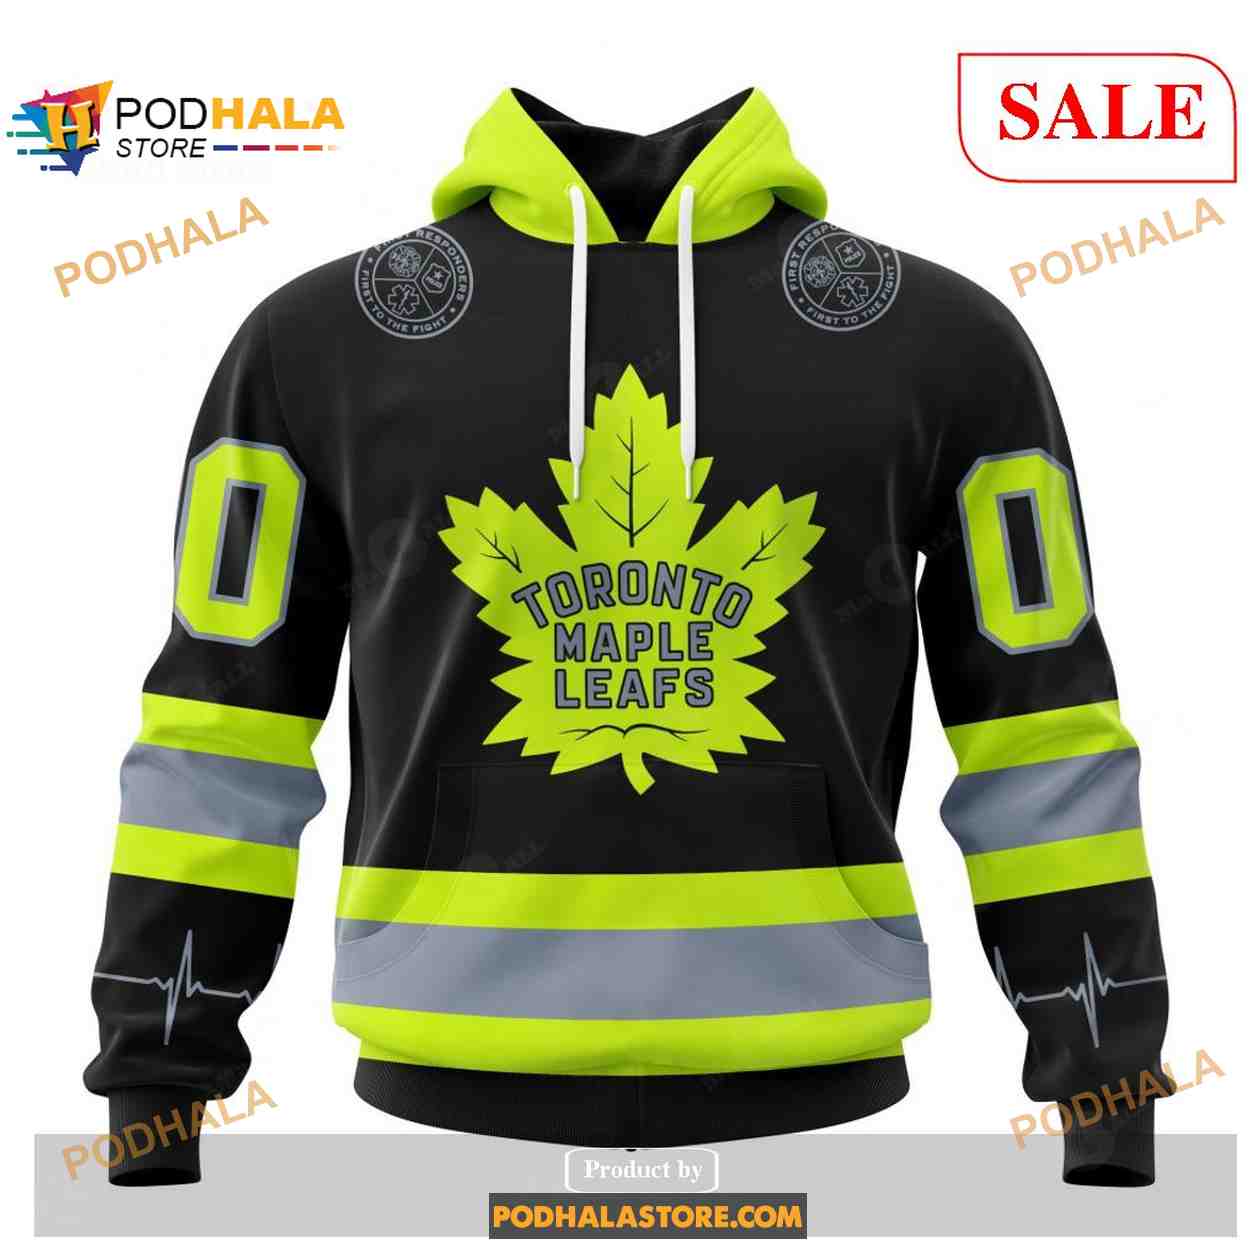 NHL Toronto Maple Leaf's hockey jersey